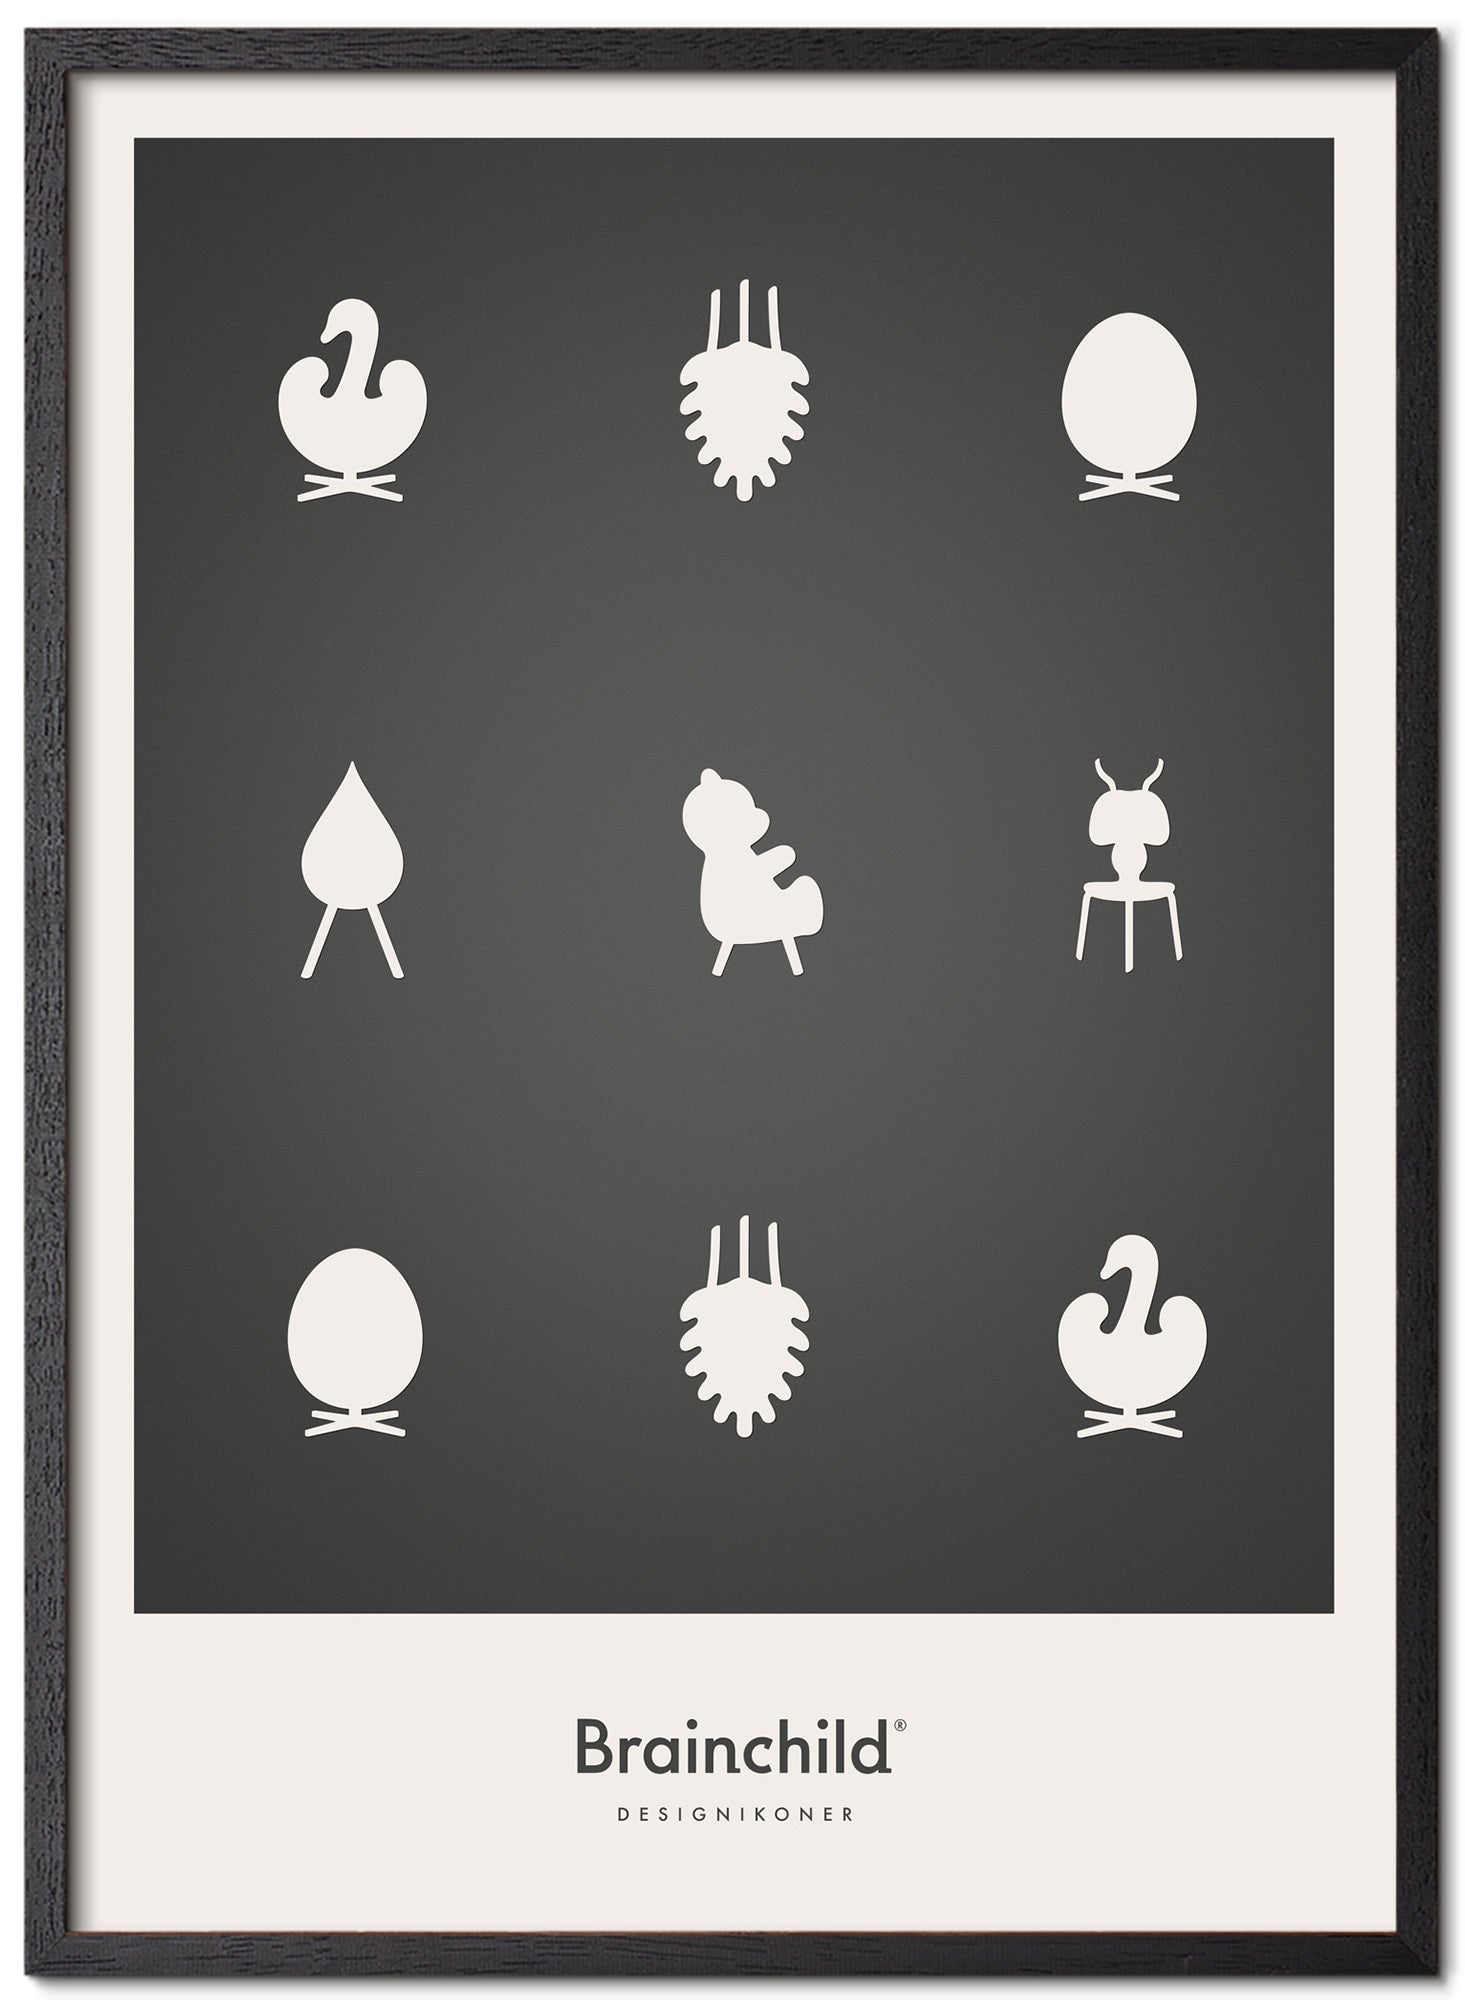 Brainchild Design-Ikonen Posterrahmen aus schwarz lackiertem Holz 50x70 cm, dunkelgrau